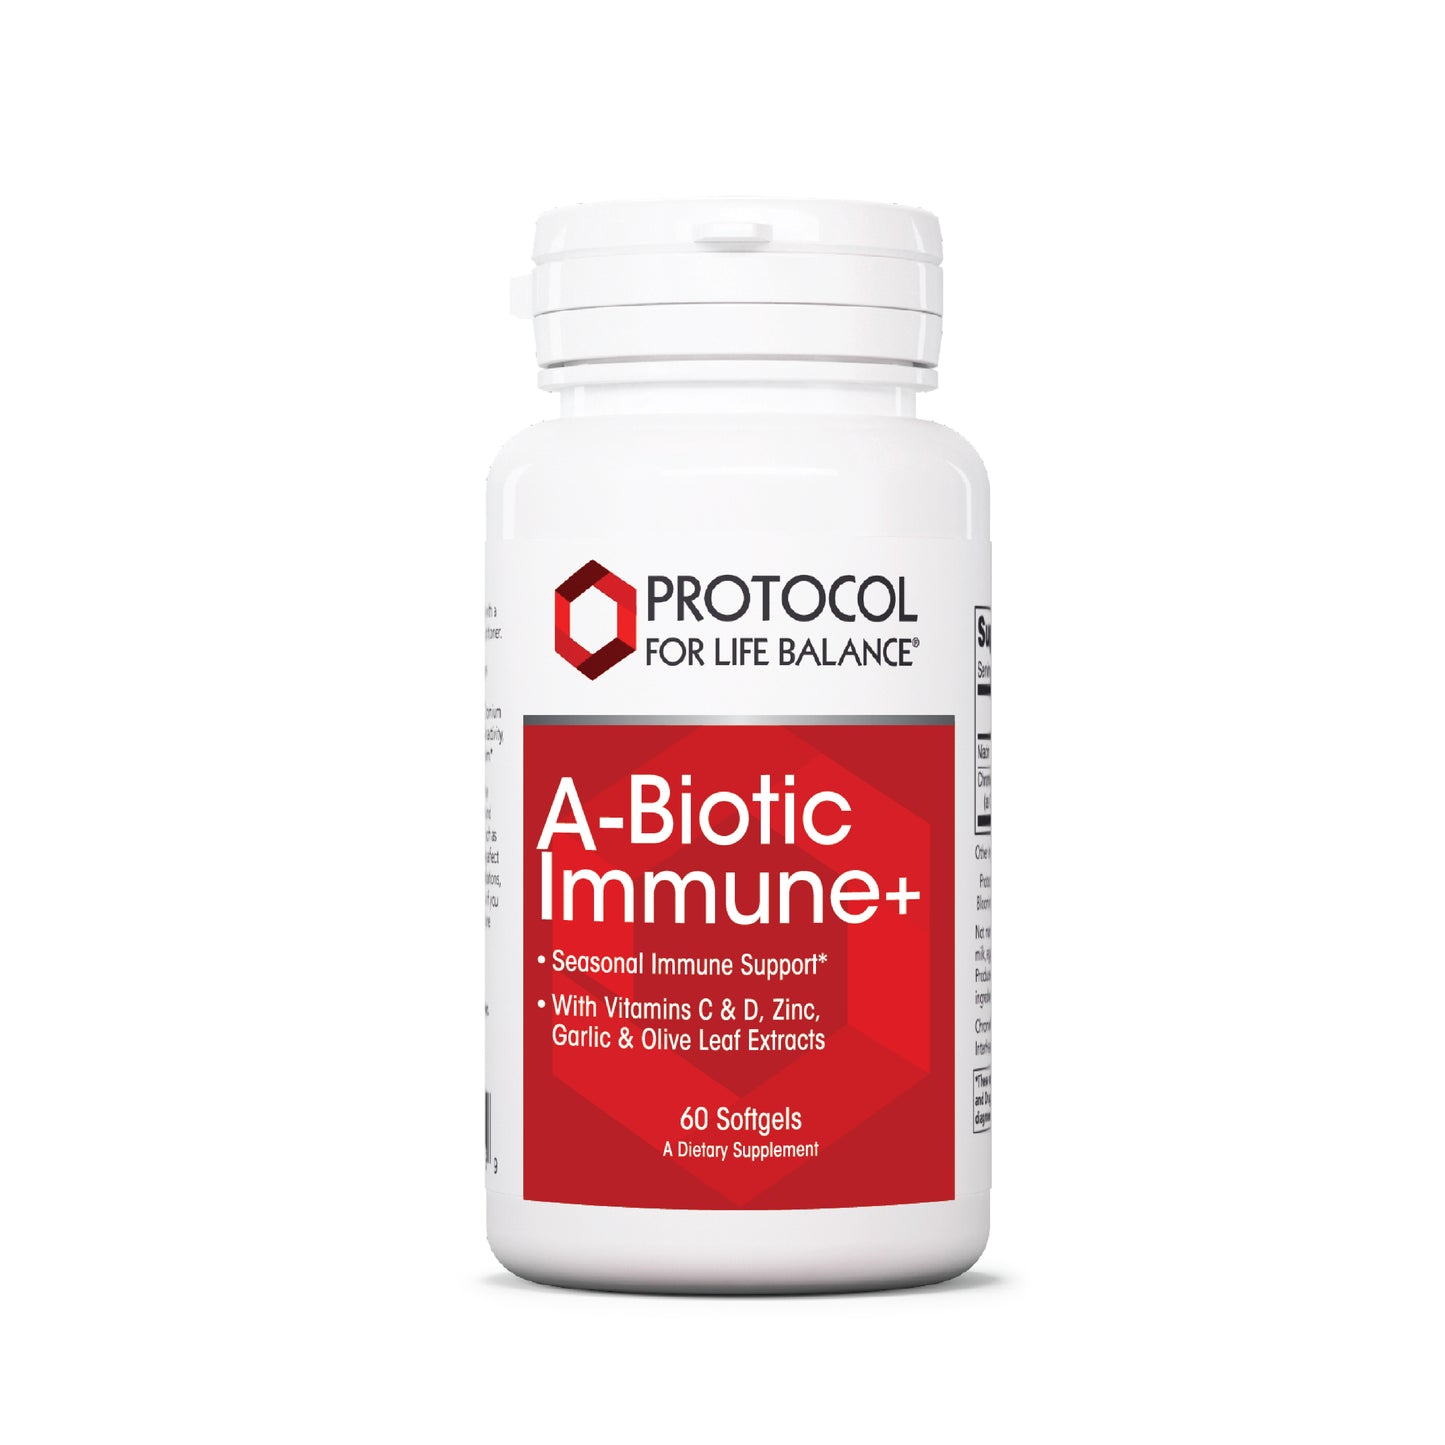 Protocol for Life Balance, A-Biotic Immune+, 60 Softgels